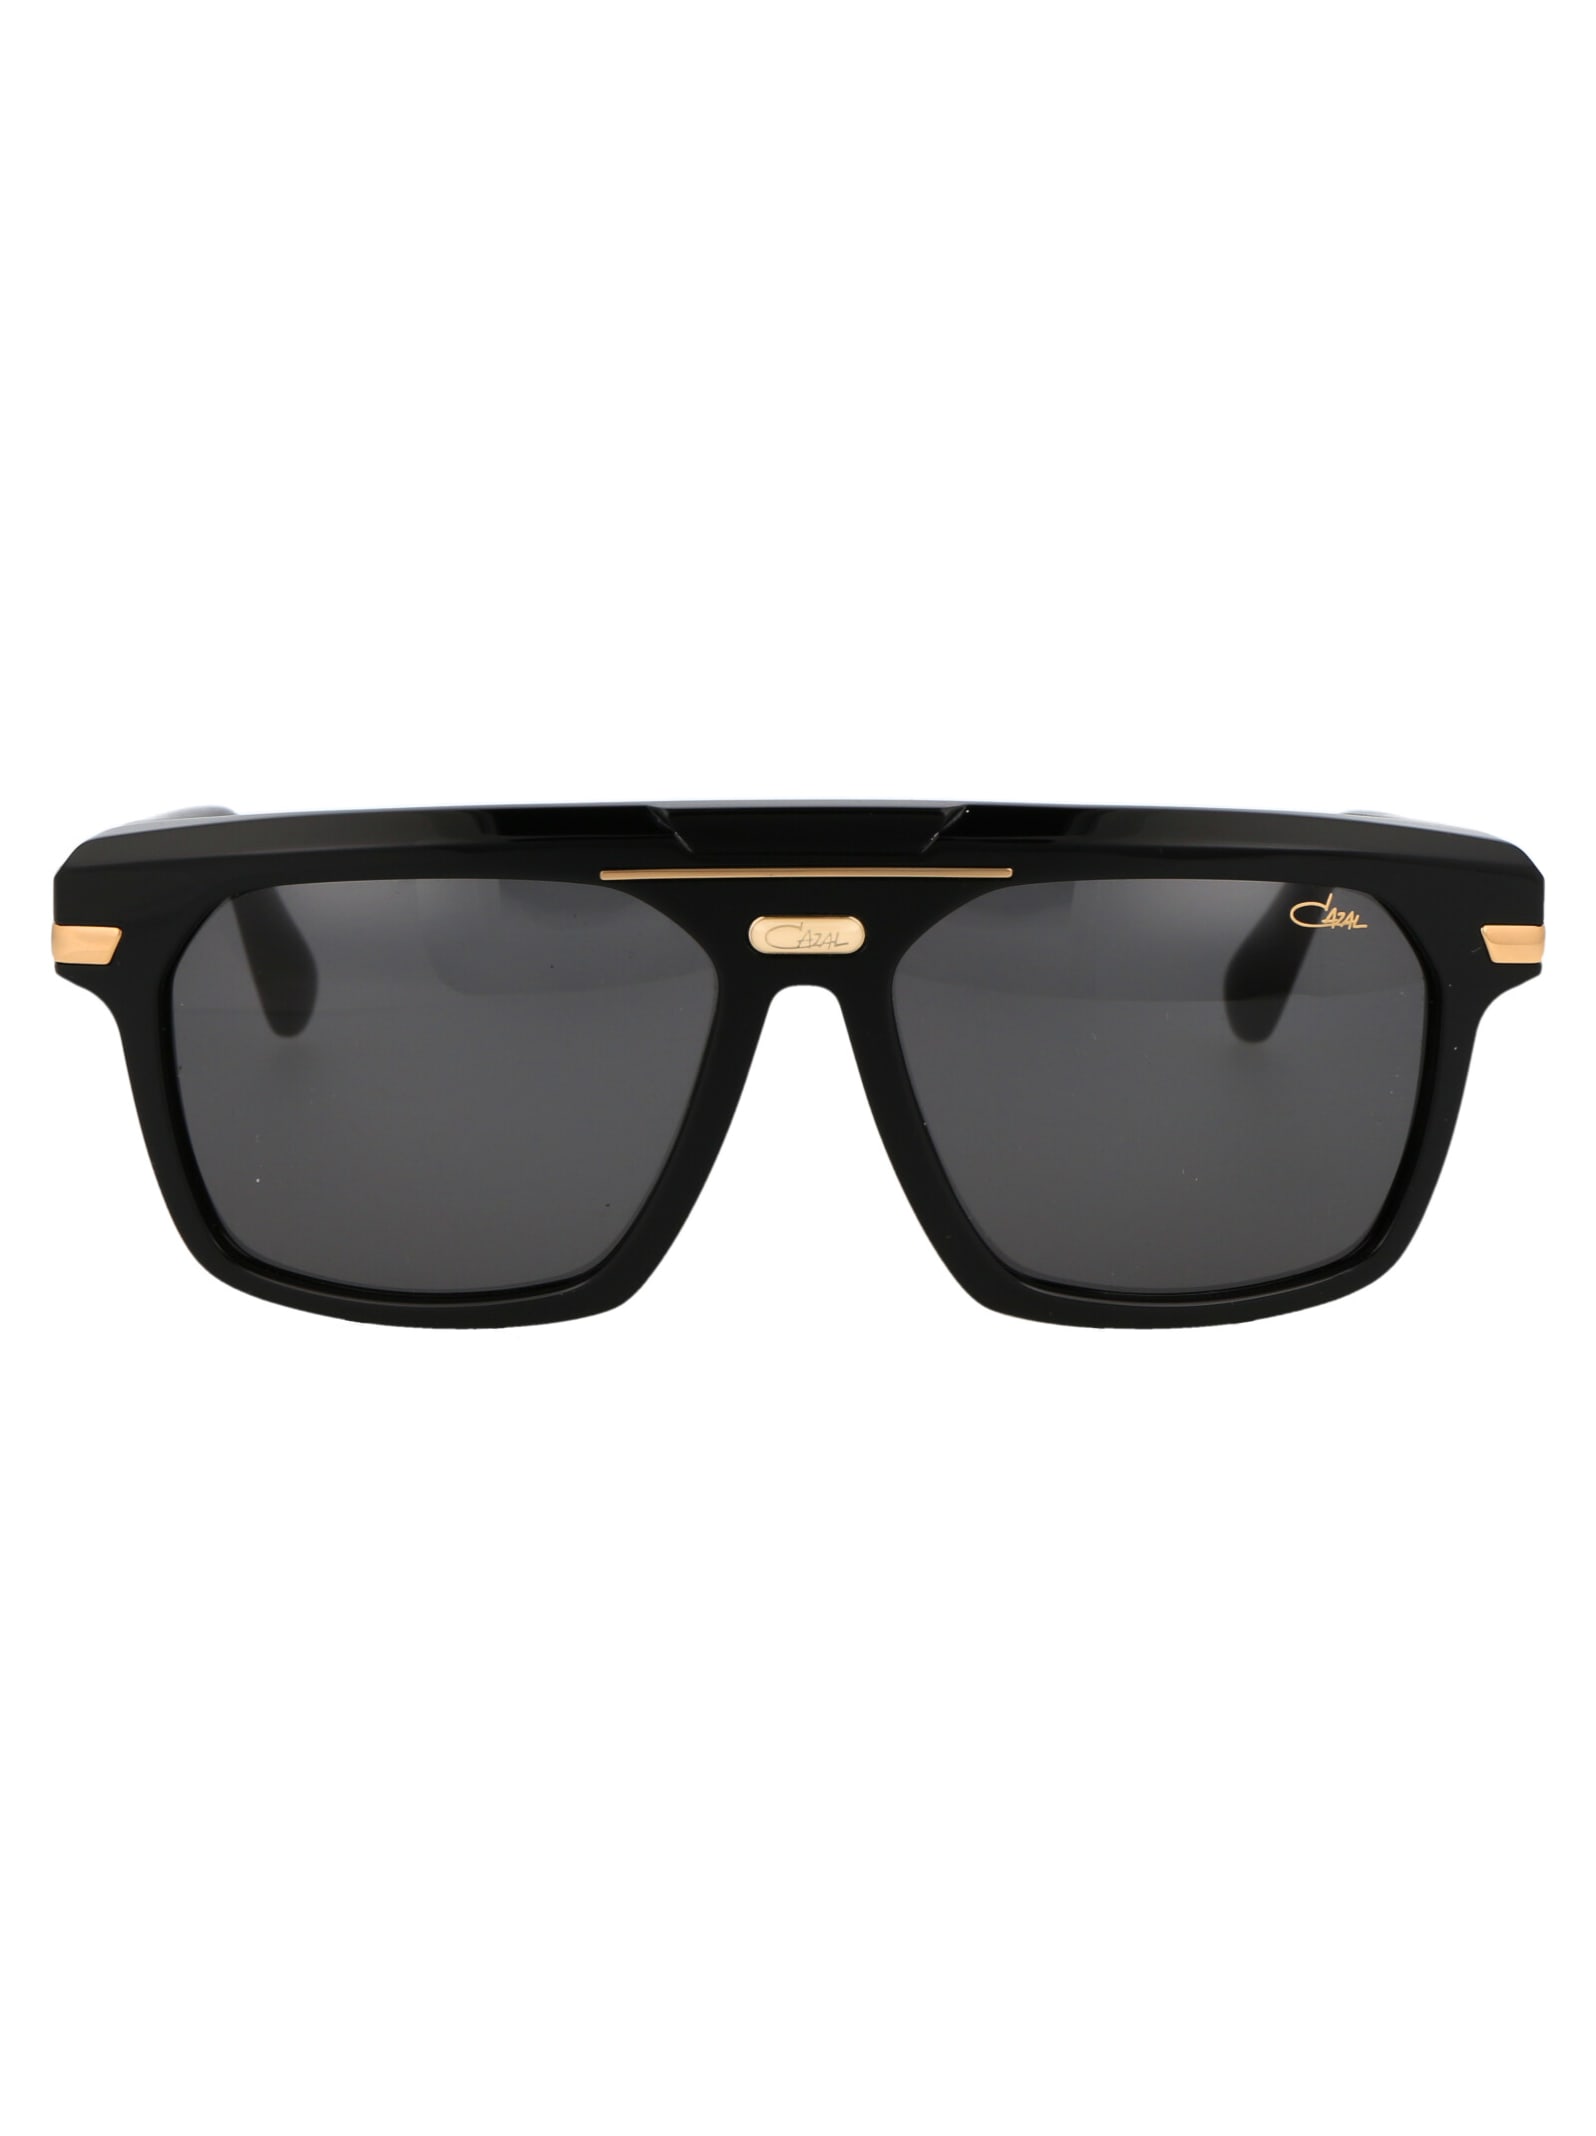 Cazal Mod. 8040 Sunglasses